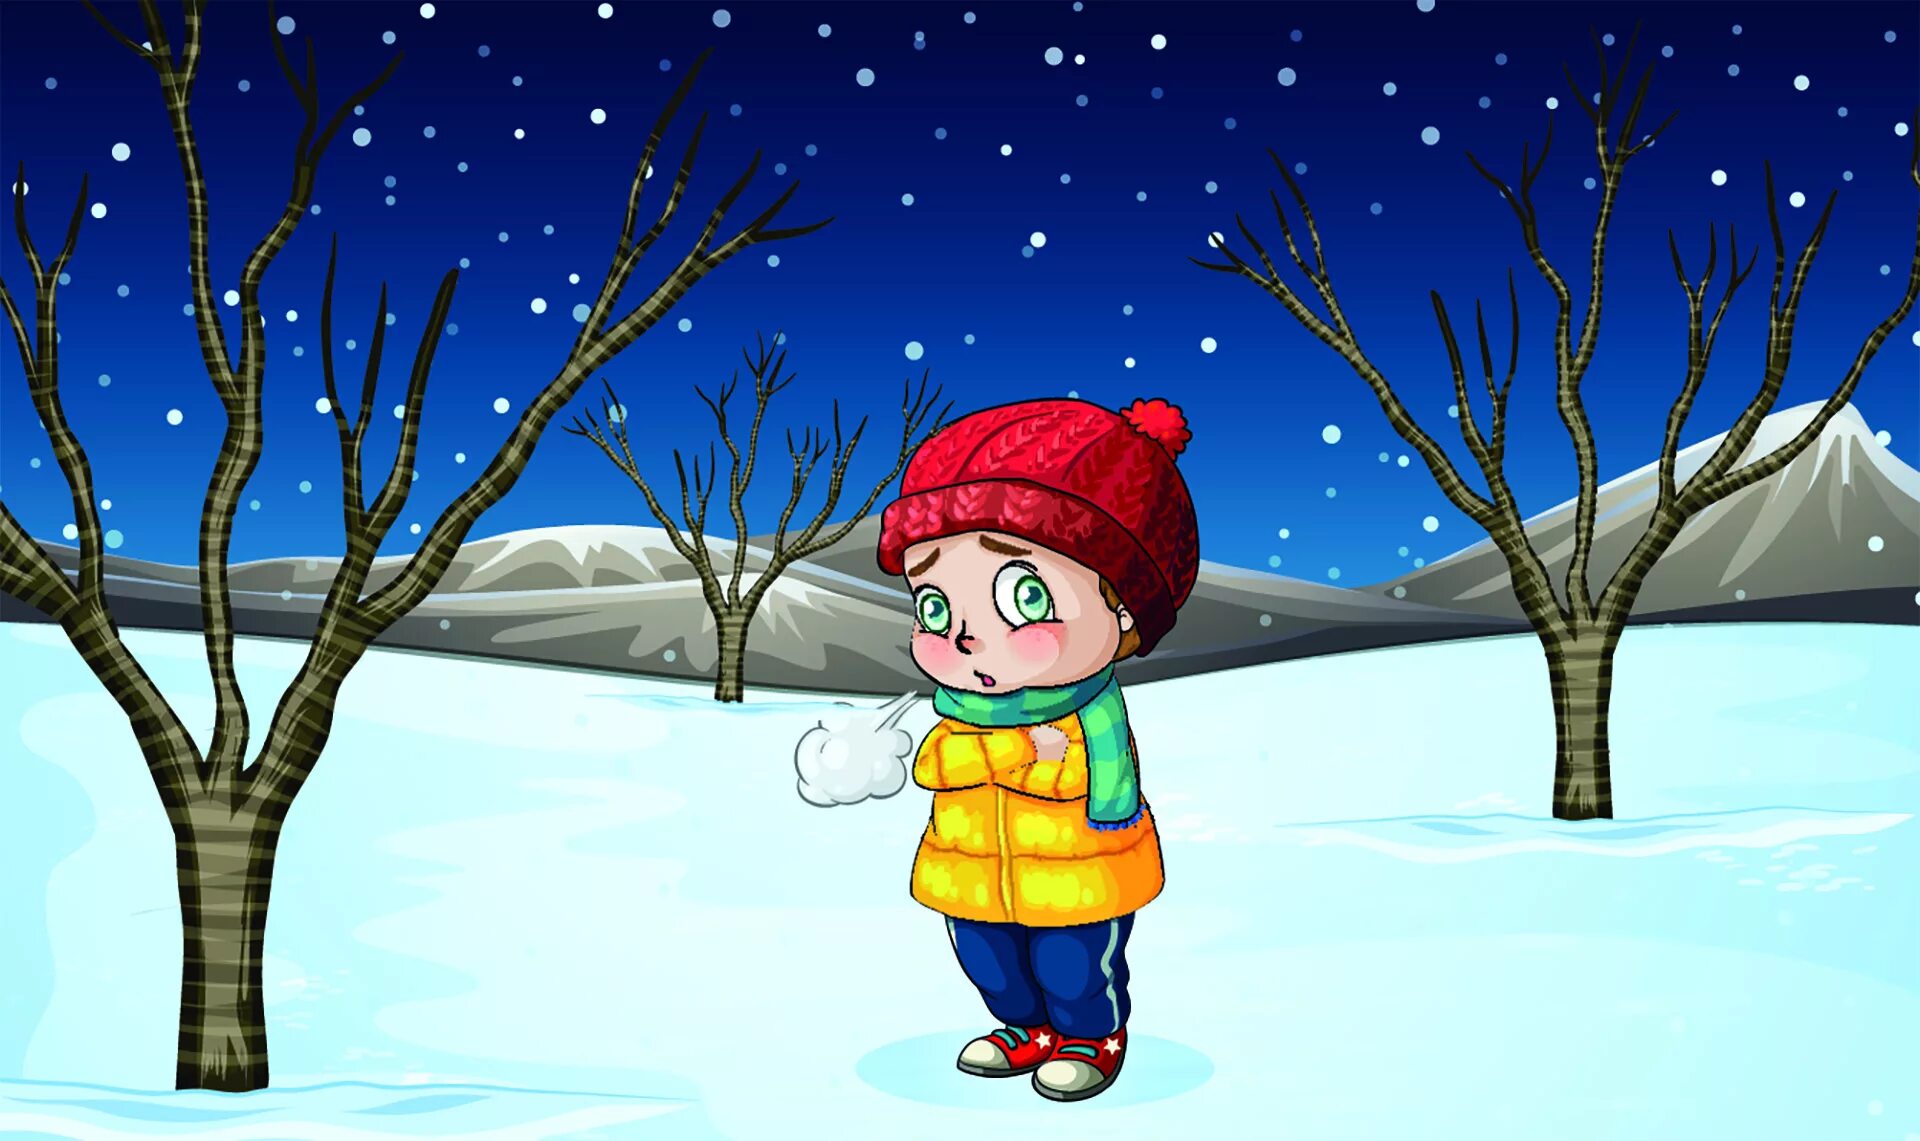 Cold kid. Cold weather для детей. Холод на улице картинка для детей. Chilly weather рисунок. Картинки Cold weather for Kids.